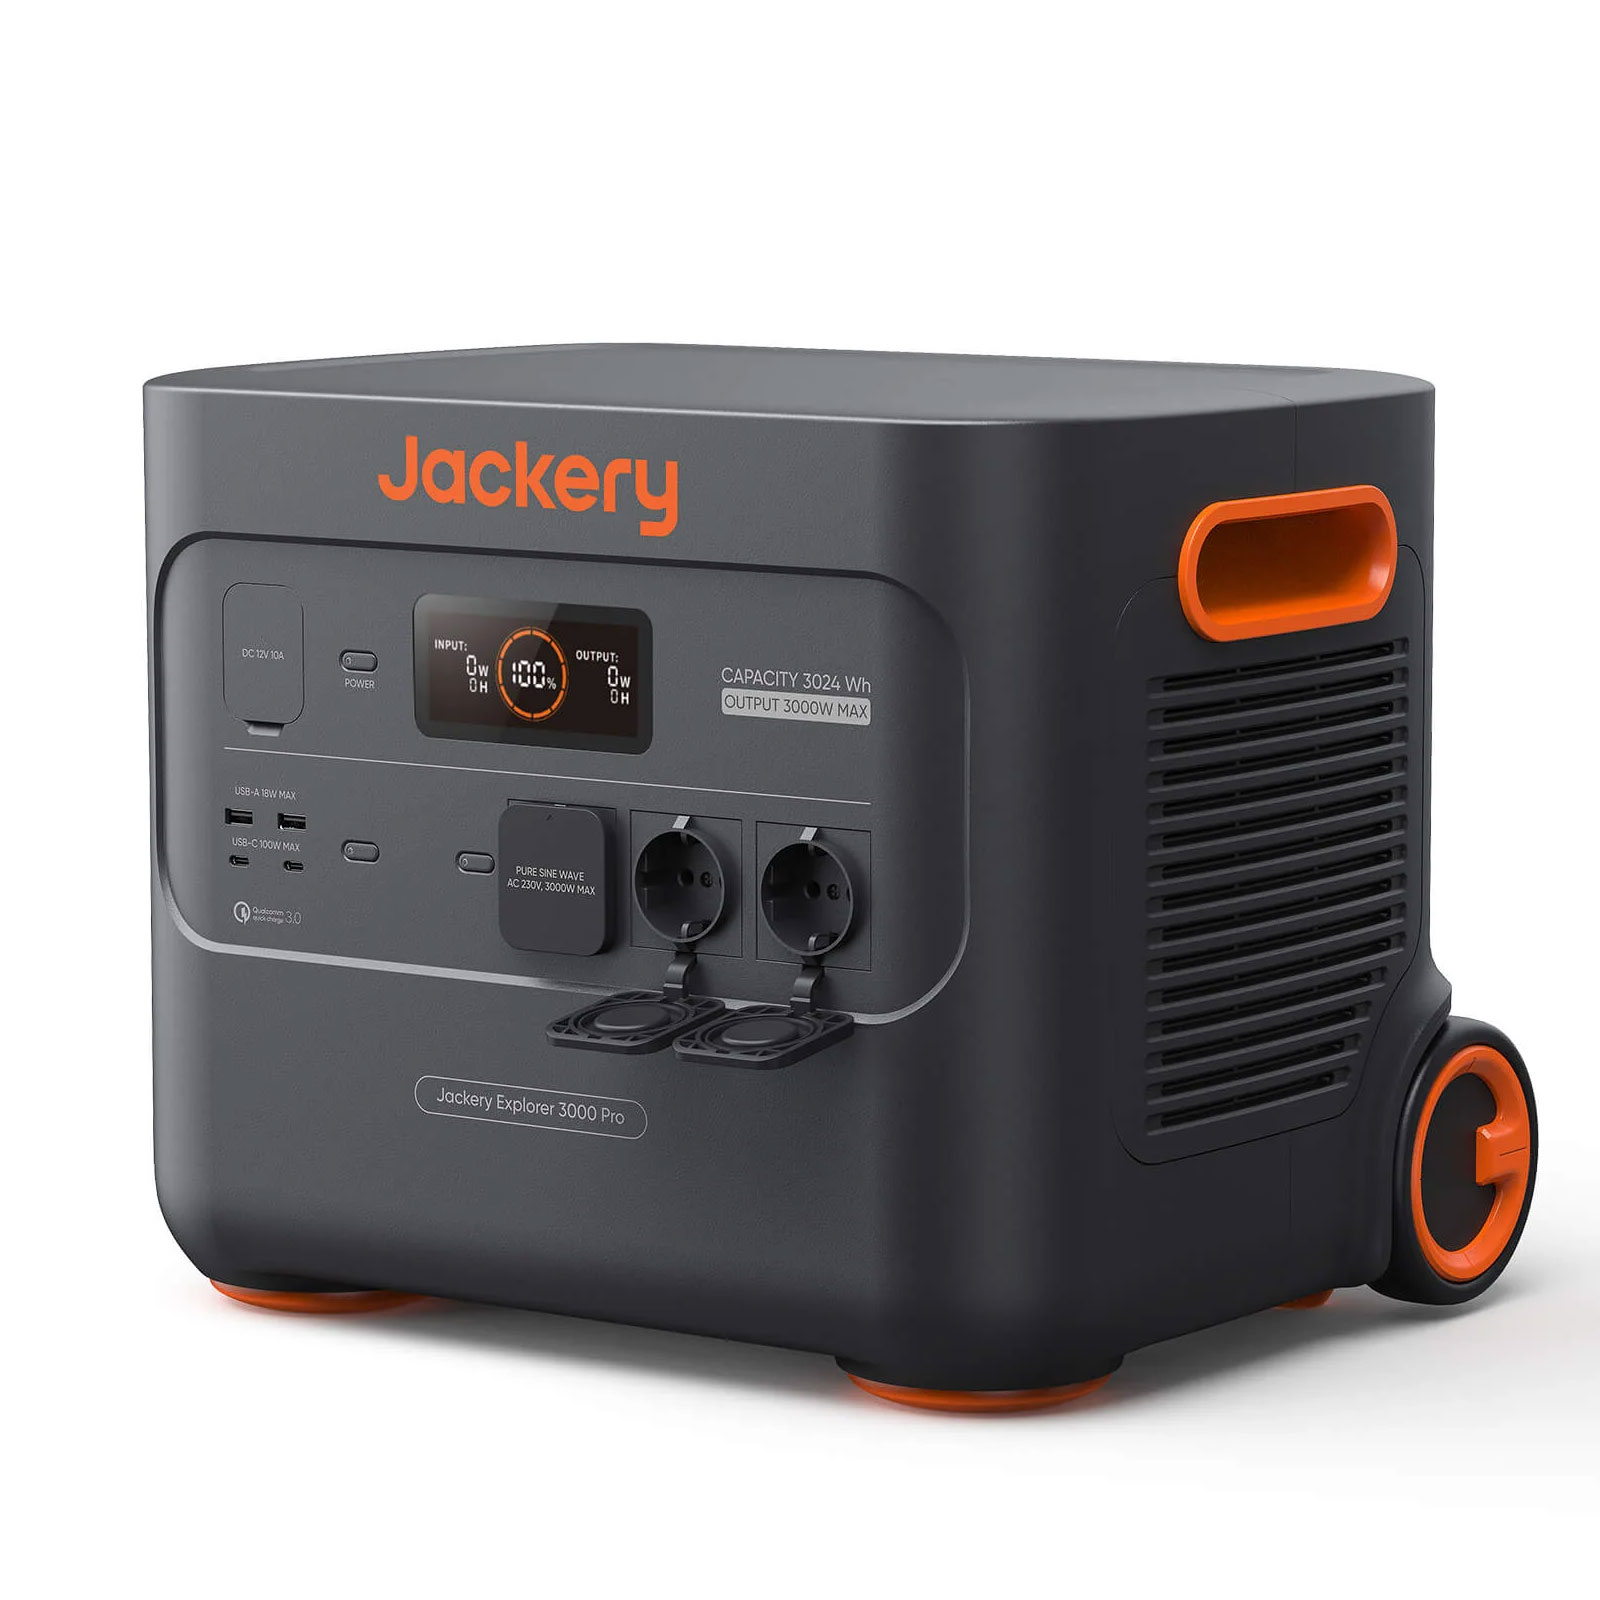 Jackery Explorer 3000 Pro Powerstation